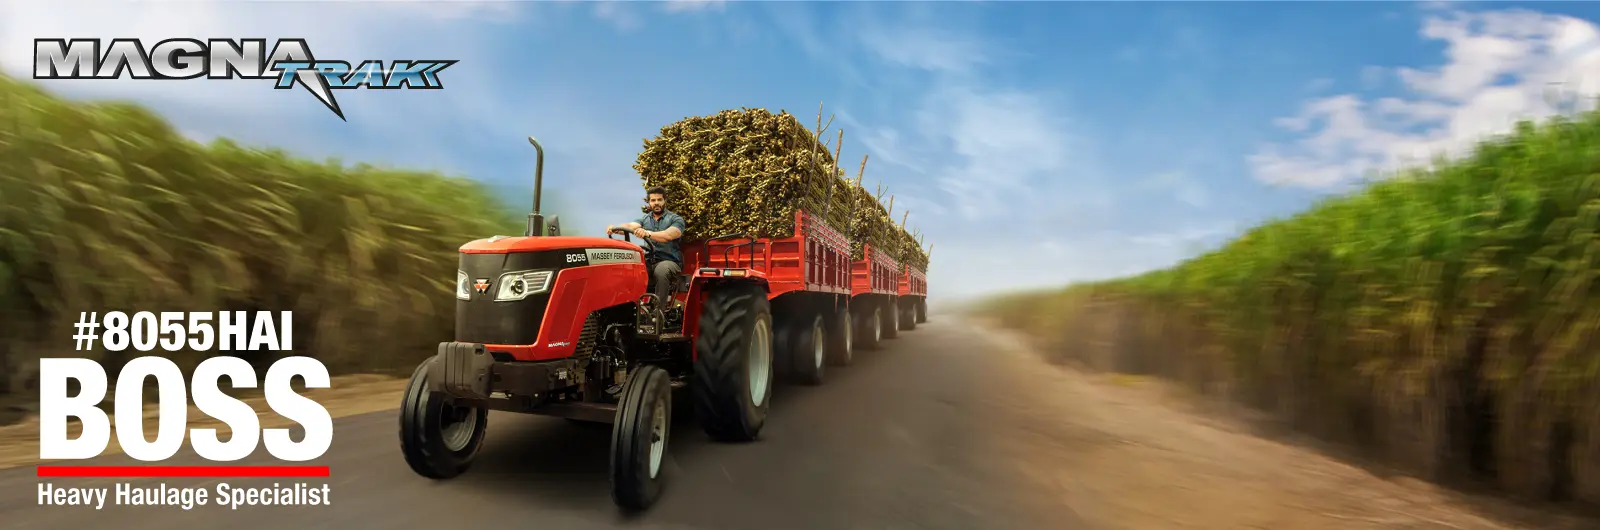 Massey Ferguson 8055 Magnatrak | Agriculture tractor